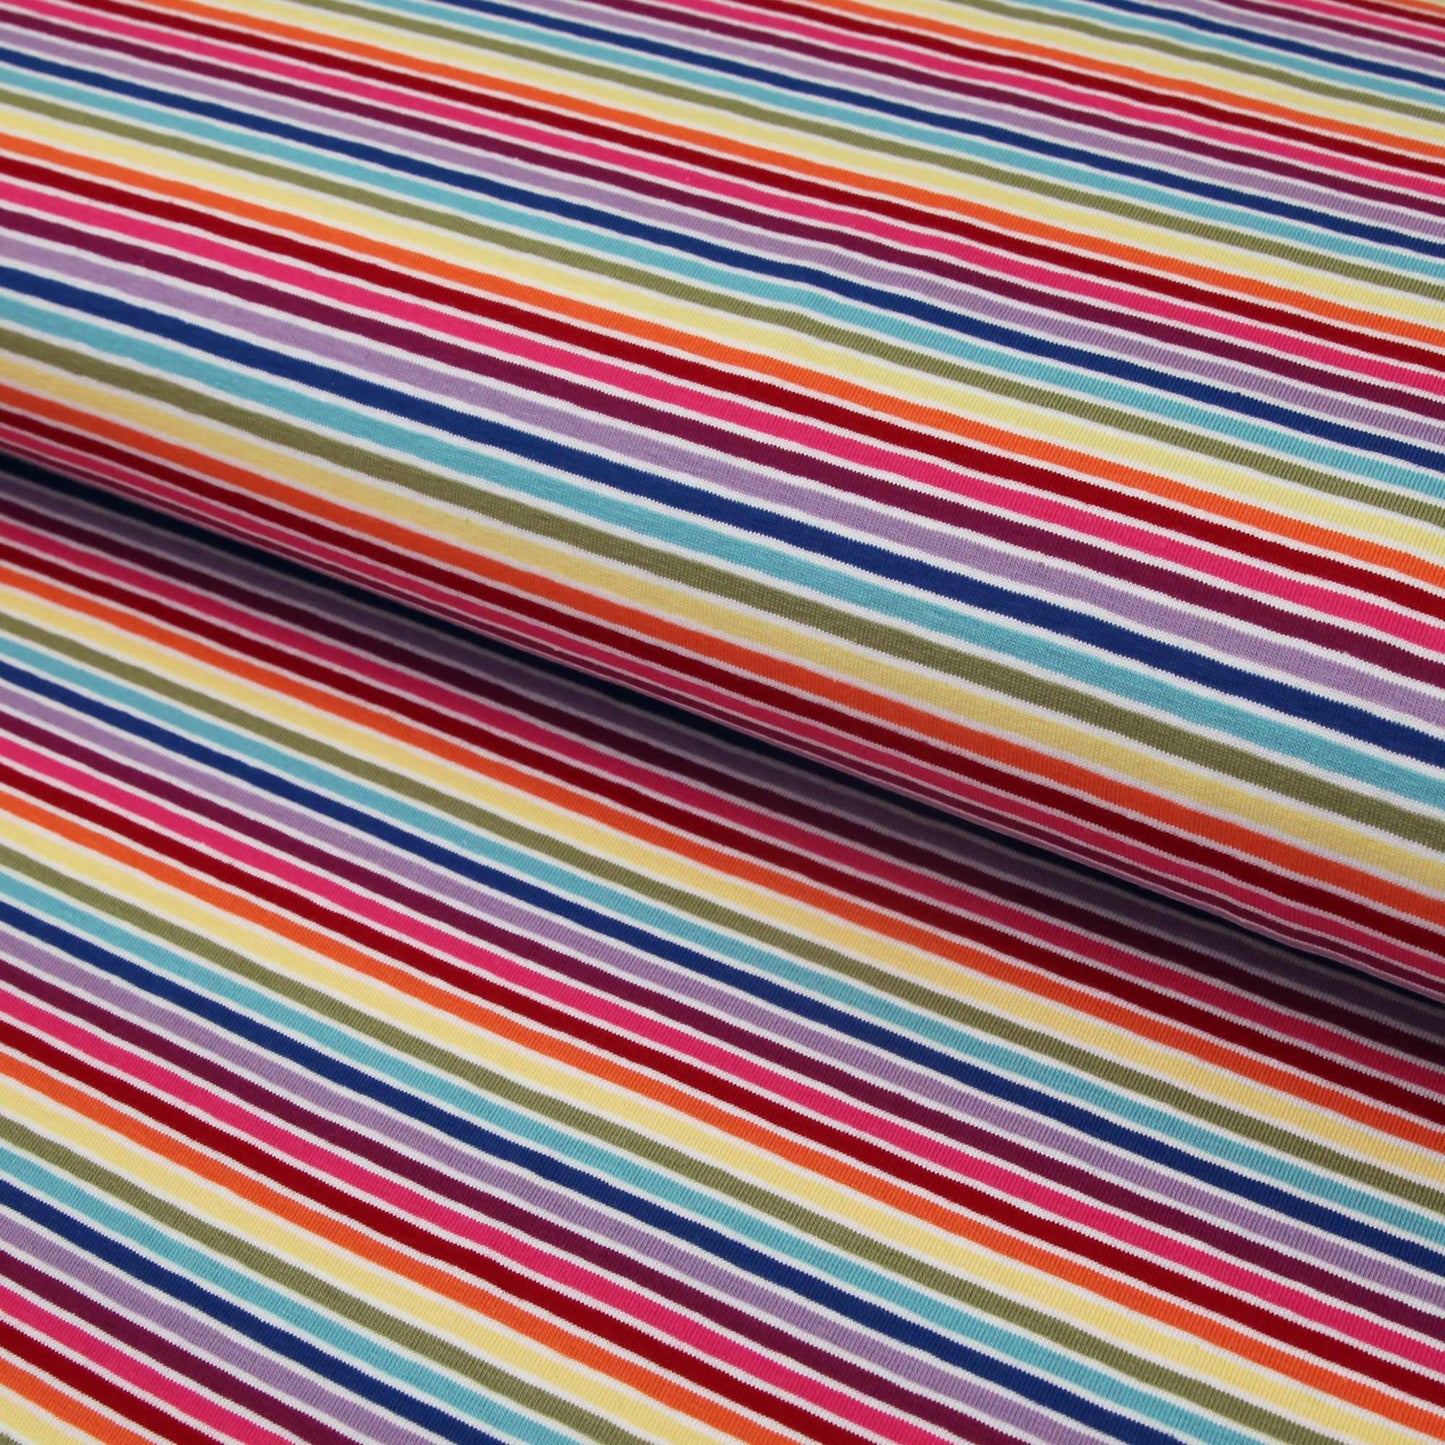    Ringeljersey-Stoffe-Streifen-Multicolor-Bunt-Regenbogen-weiss-stoffe-kudellino